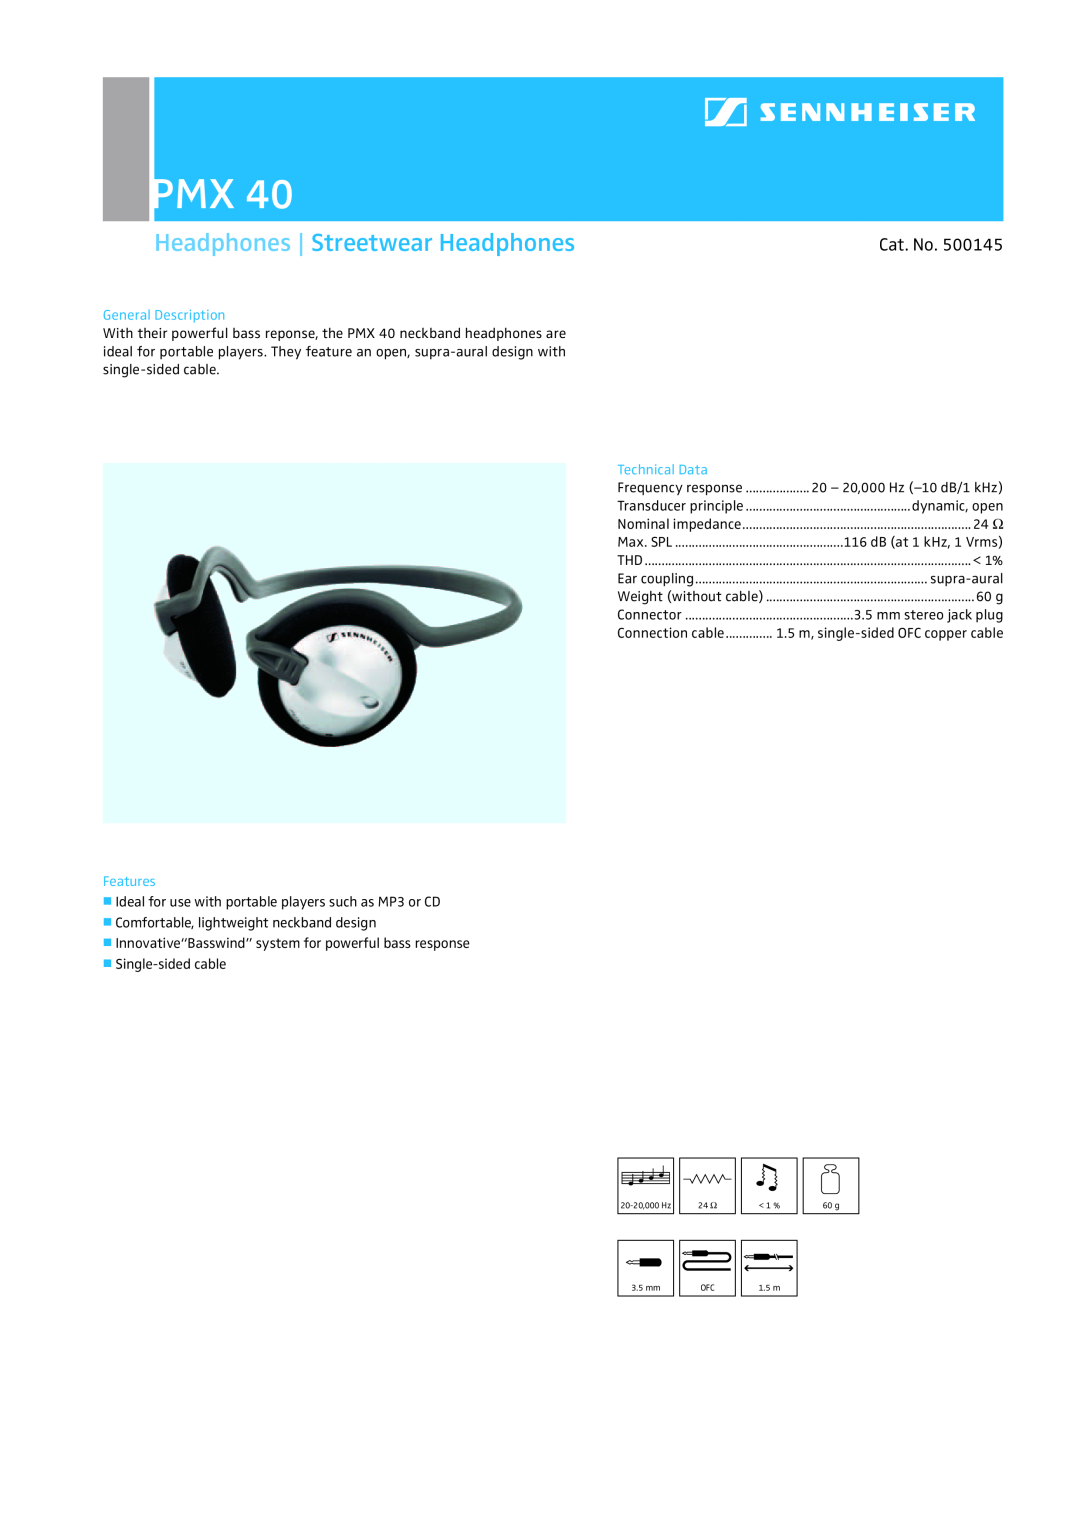 Sennheiser PMX 40 manual Headphones Streetwear Headphones, Cat. No, General Description, Technical Data, Features 